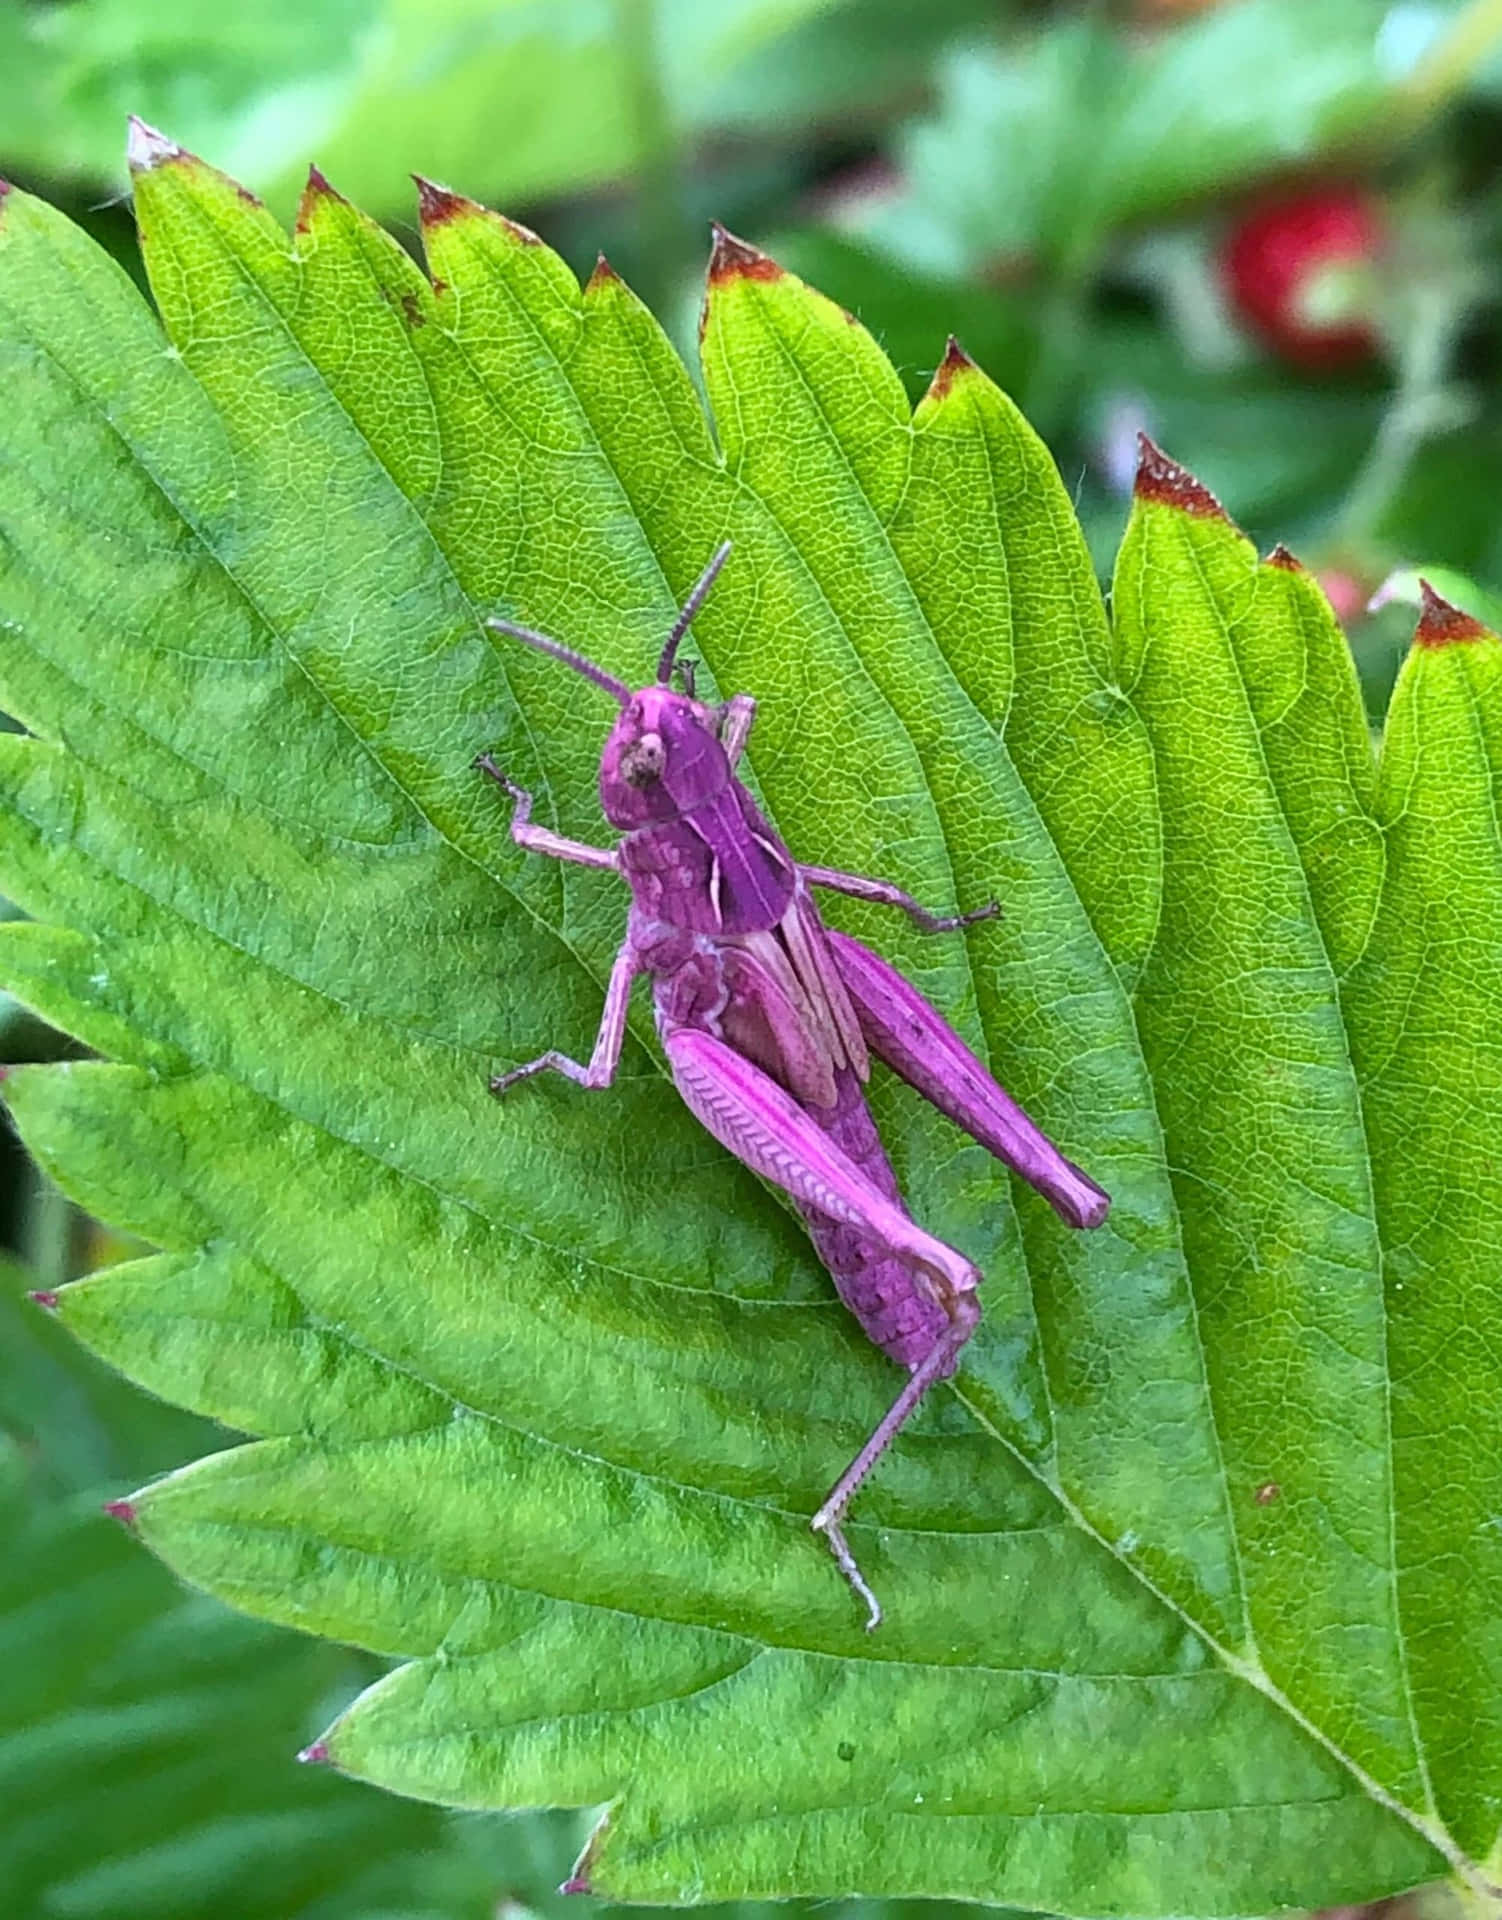 Caption: Majestic Grasshopper In Its Natural Habitat